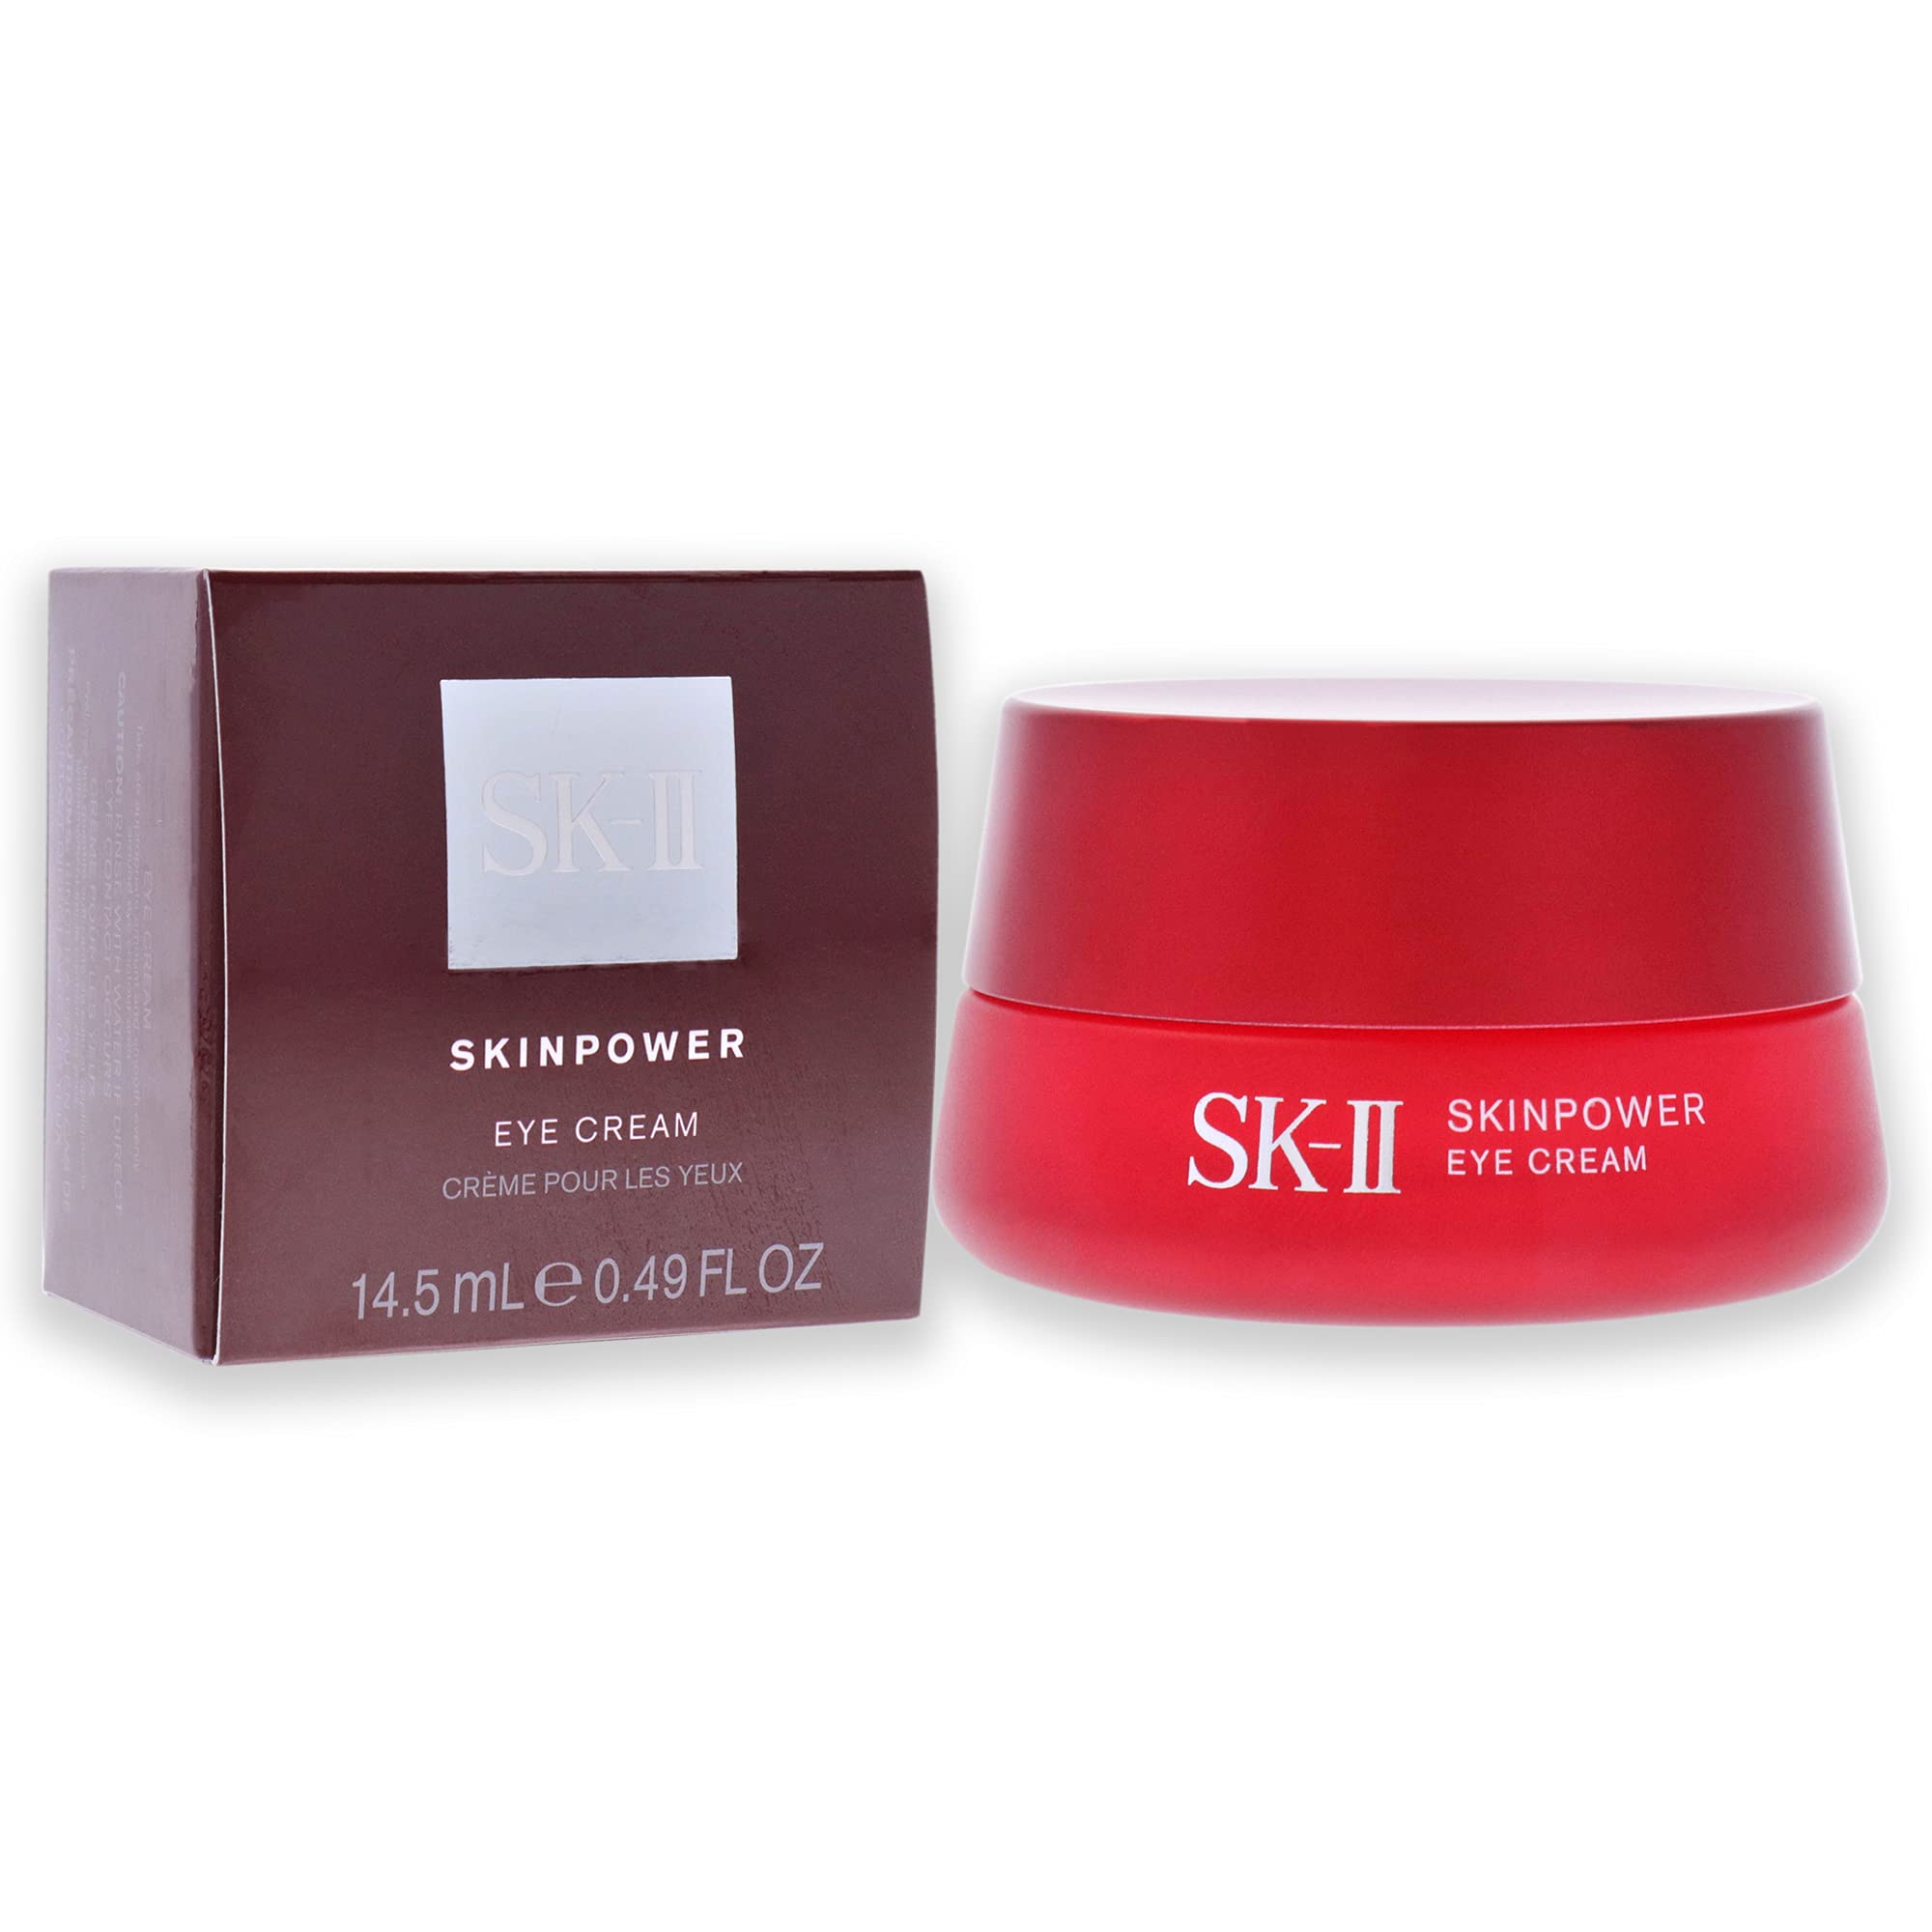 SK-II Skinpower Eye Cream Unisex 0.50 Ounce